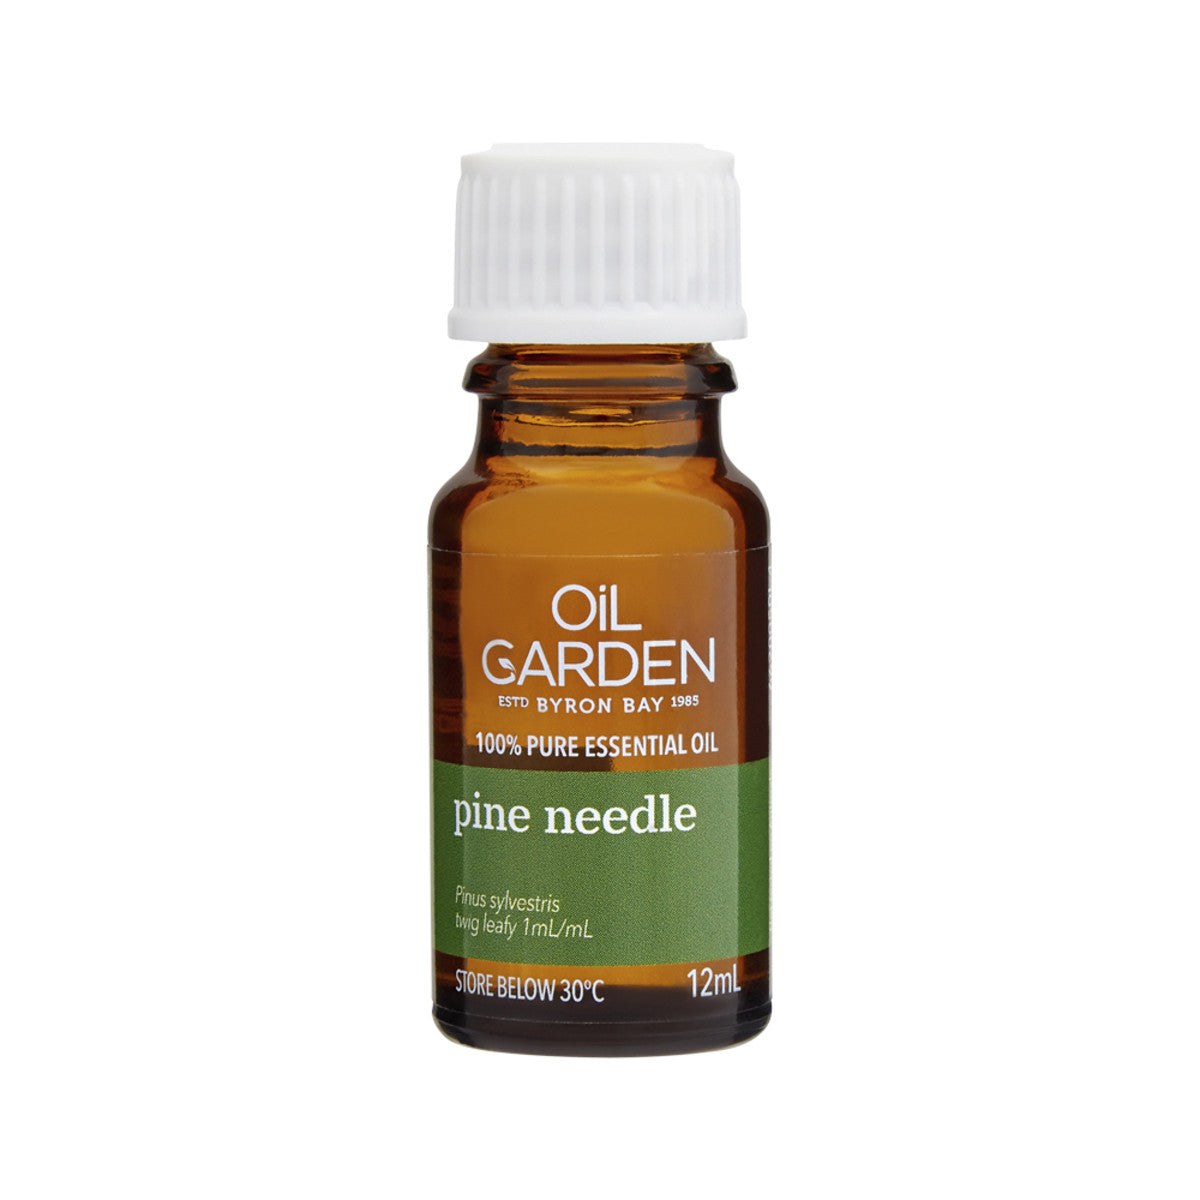 Oil Garden Essential Oil Pine Needle 12ml